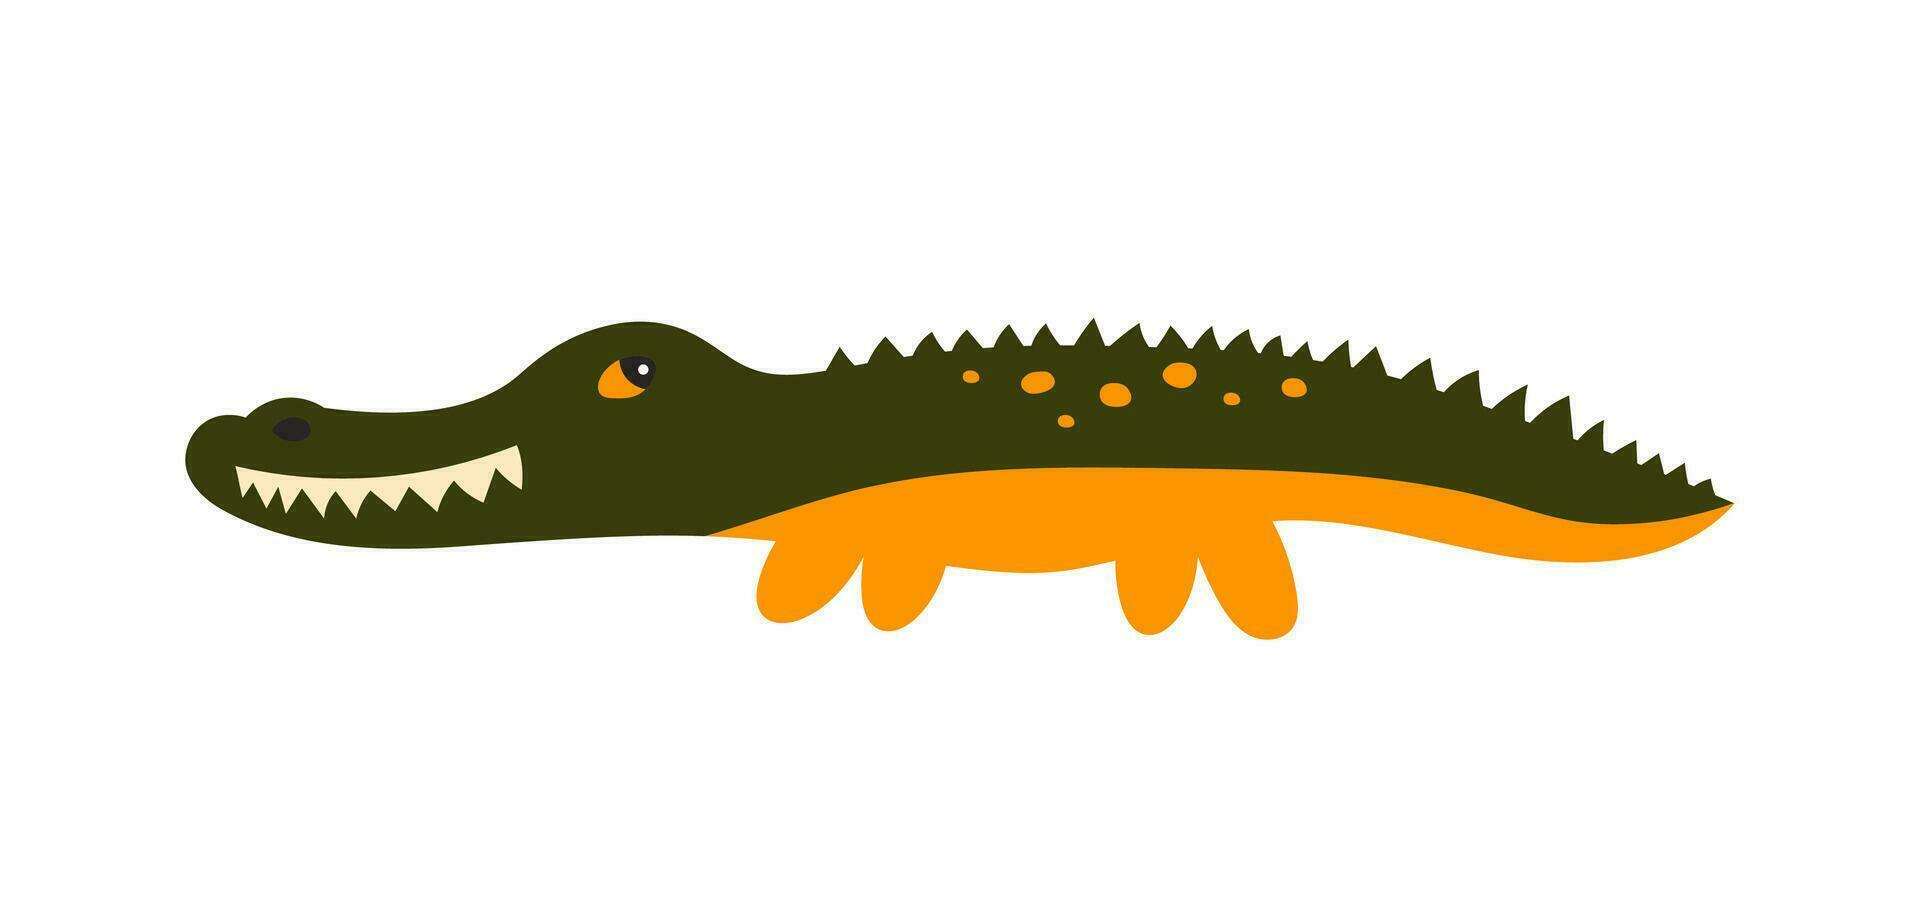 Funny crocodile vector illustration